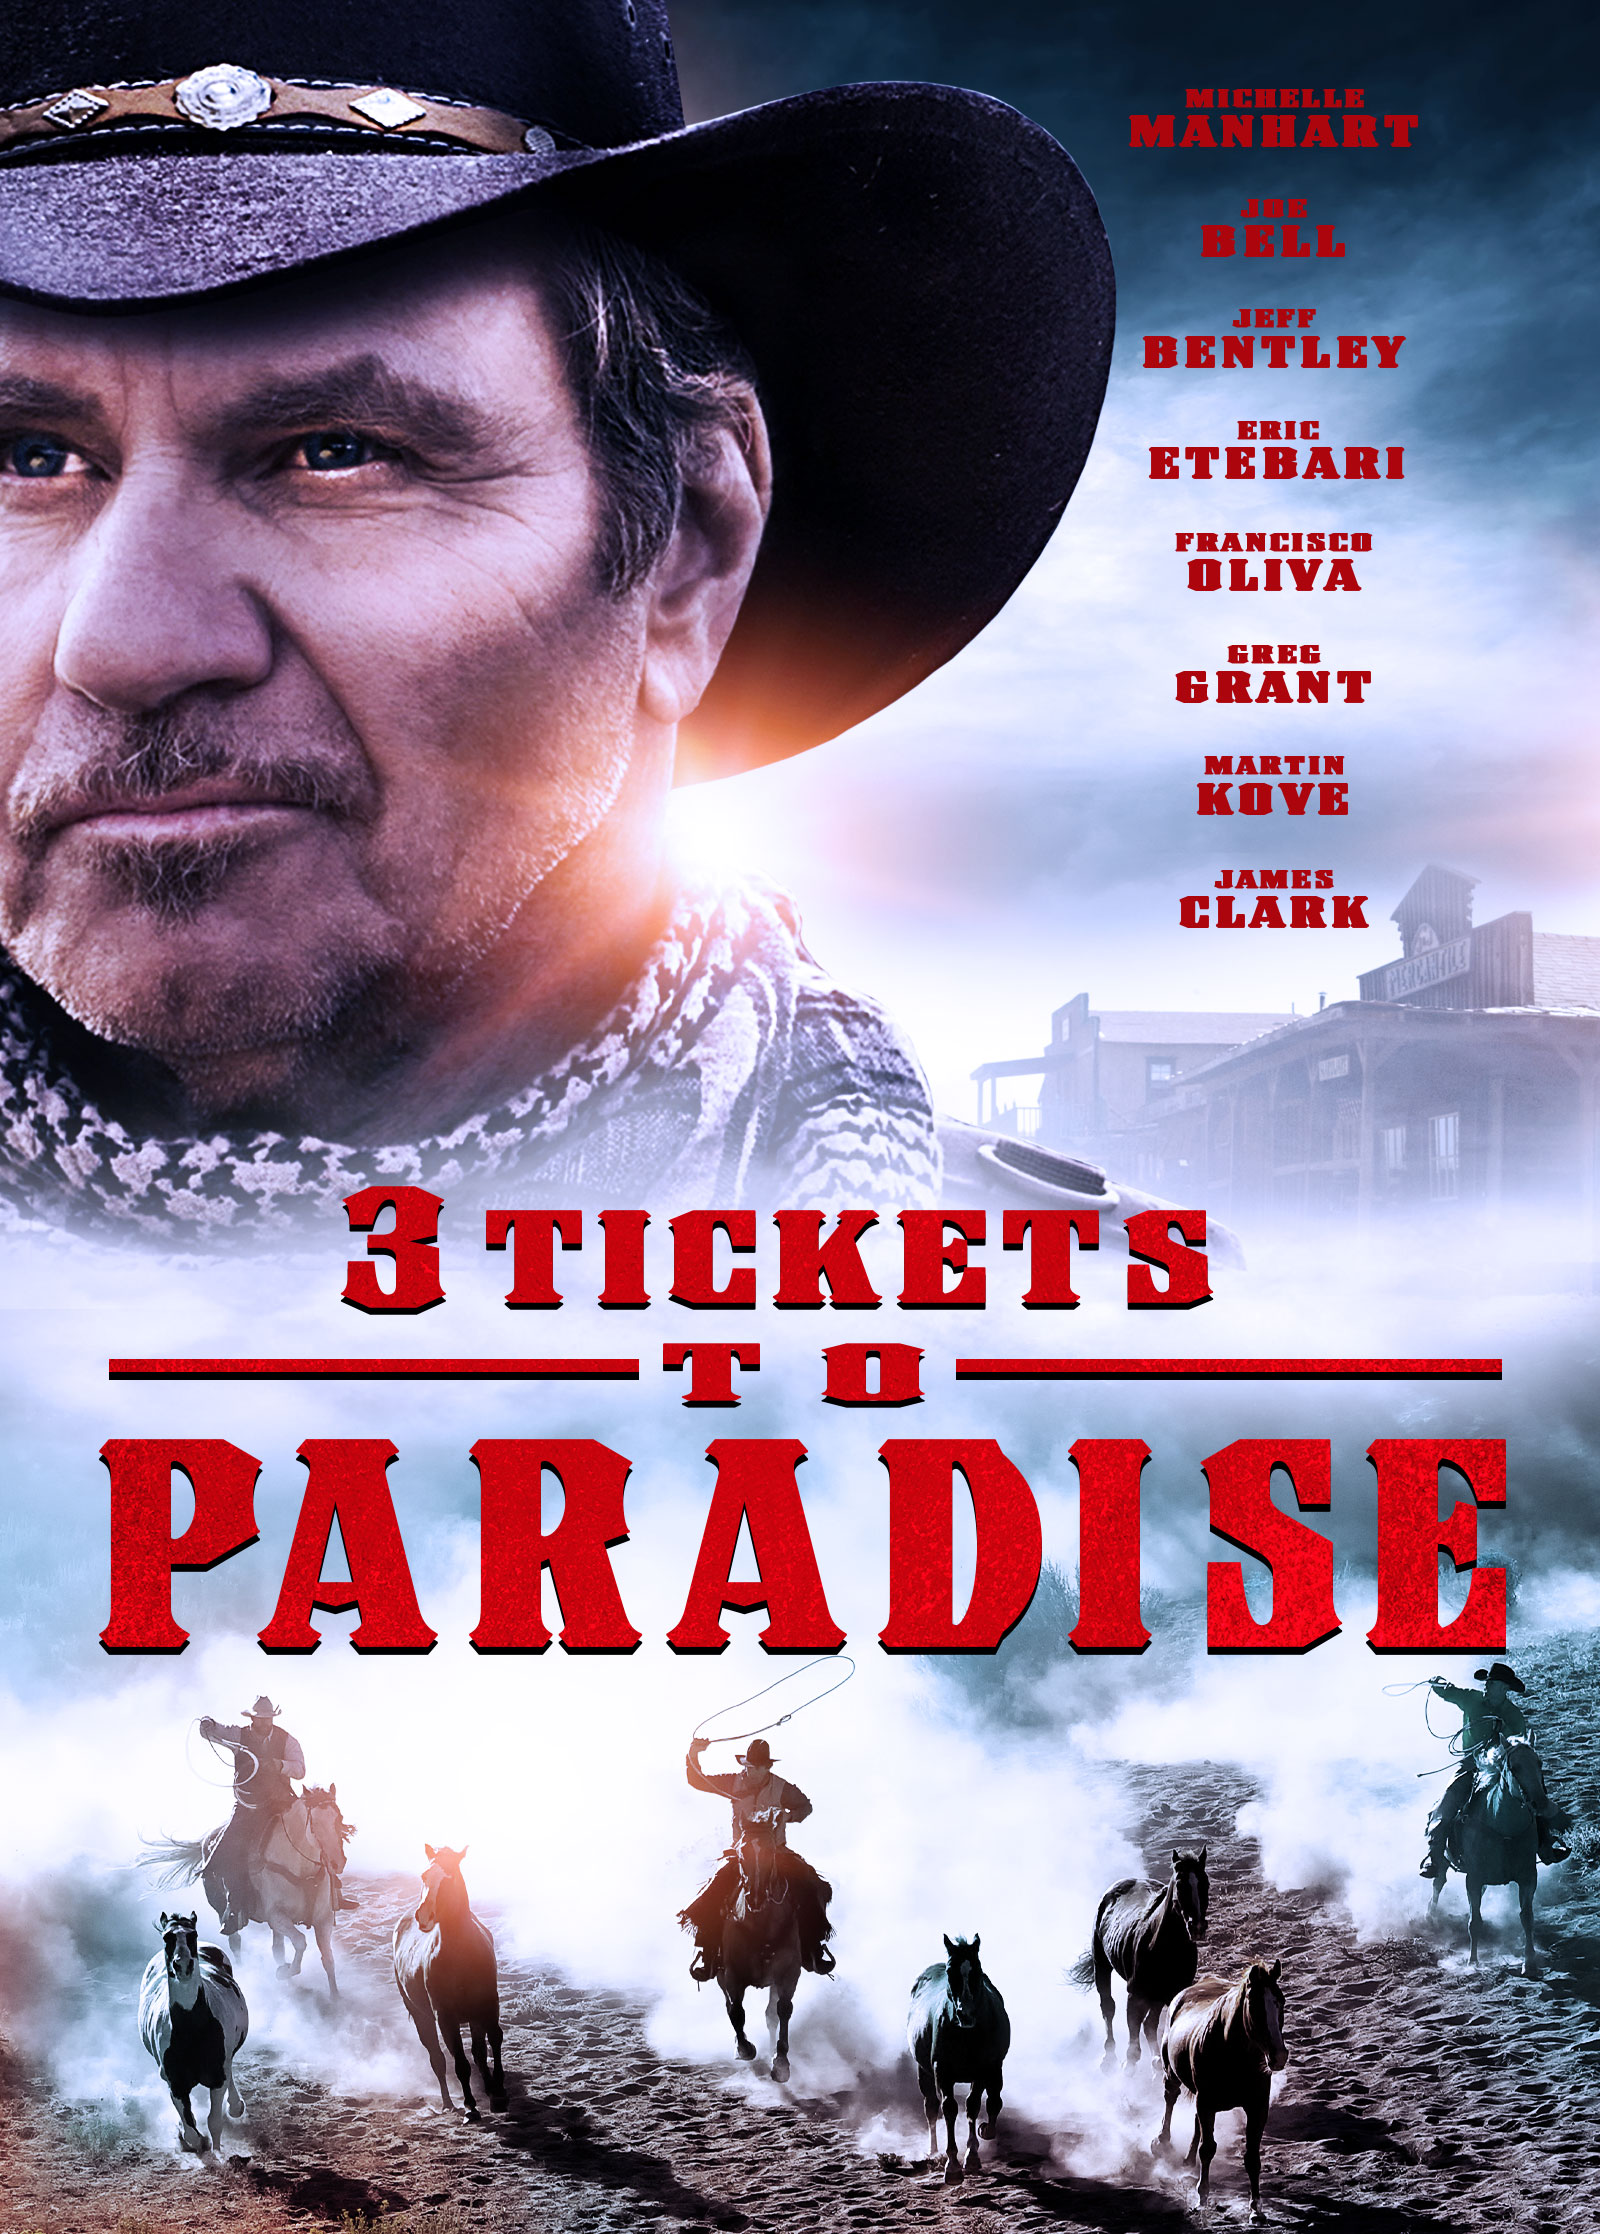 Nonton film 3 Tickets to Paradise layarkaca21 indoxx1 ganool online streaming terbaru